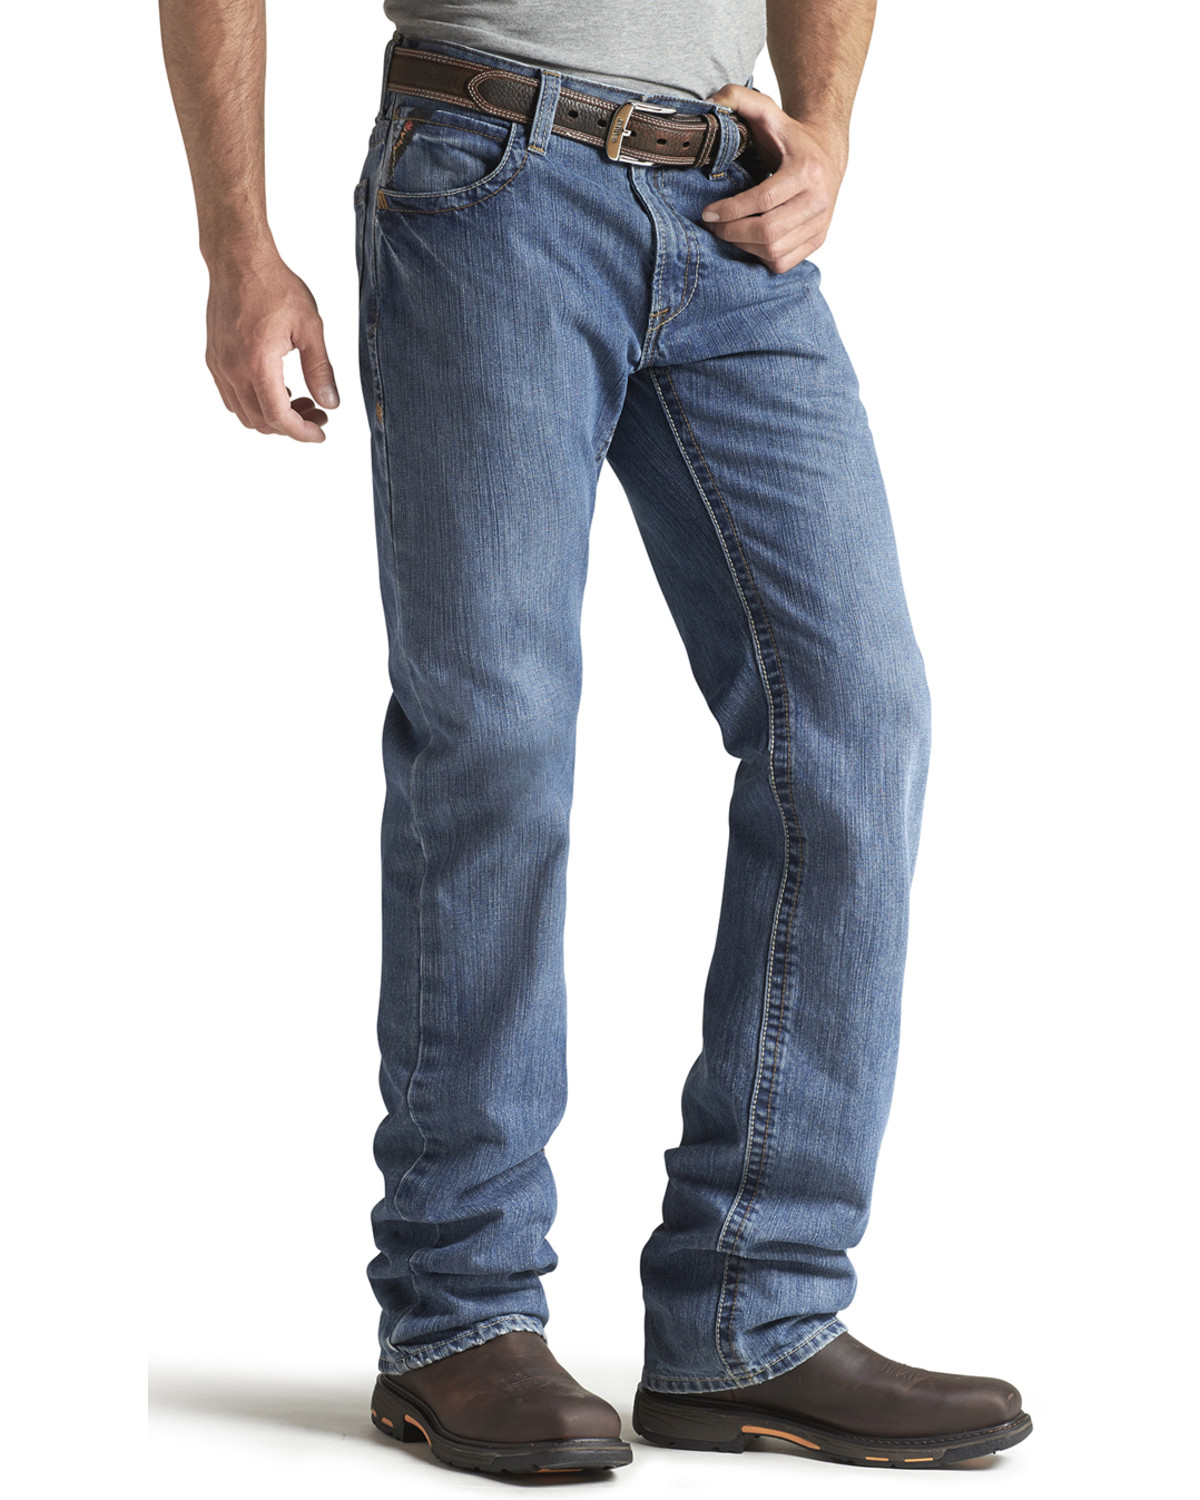 Ariat Denim Jeans - M3 Flint Loose Fit - Flame Resistant - Country ...